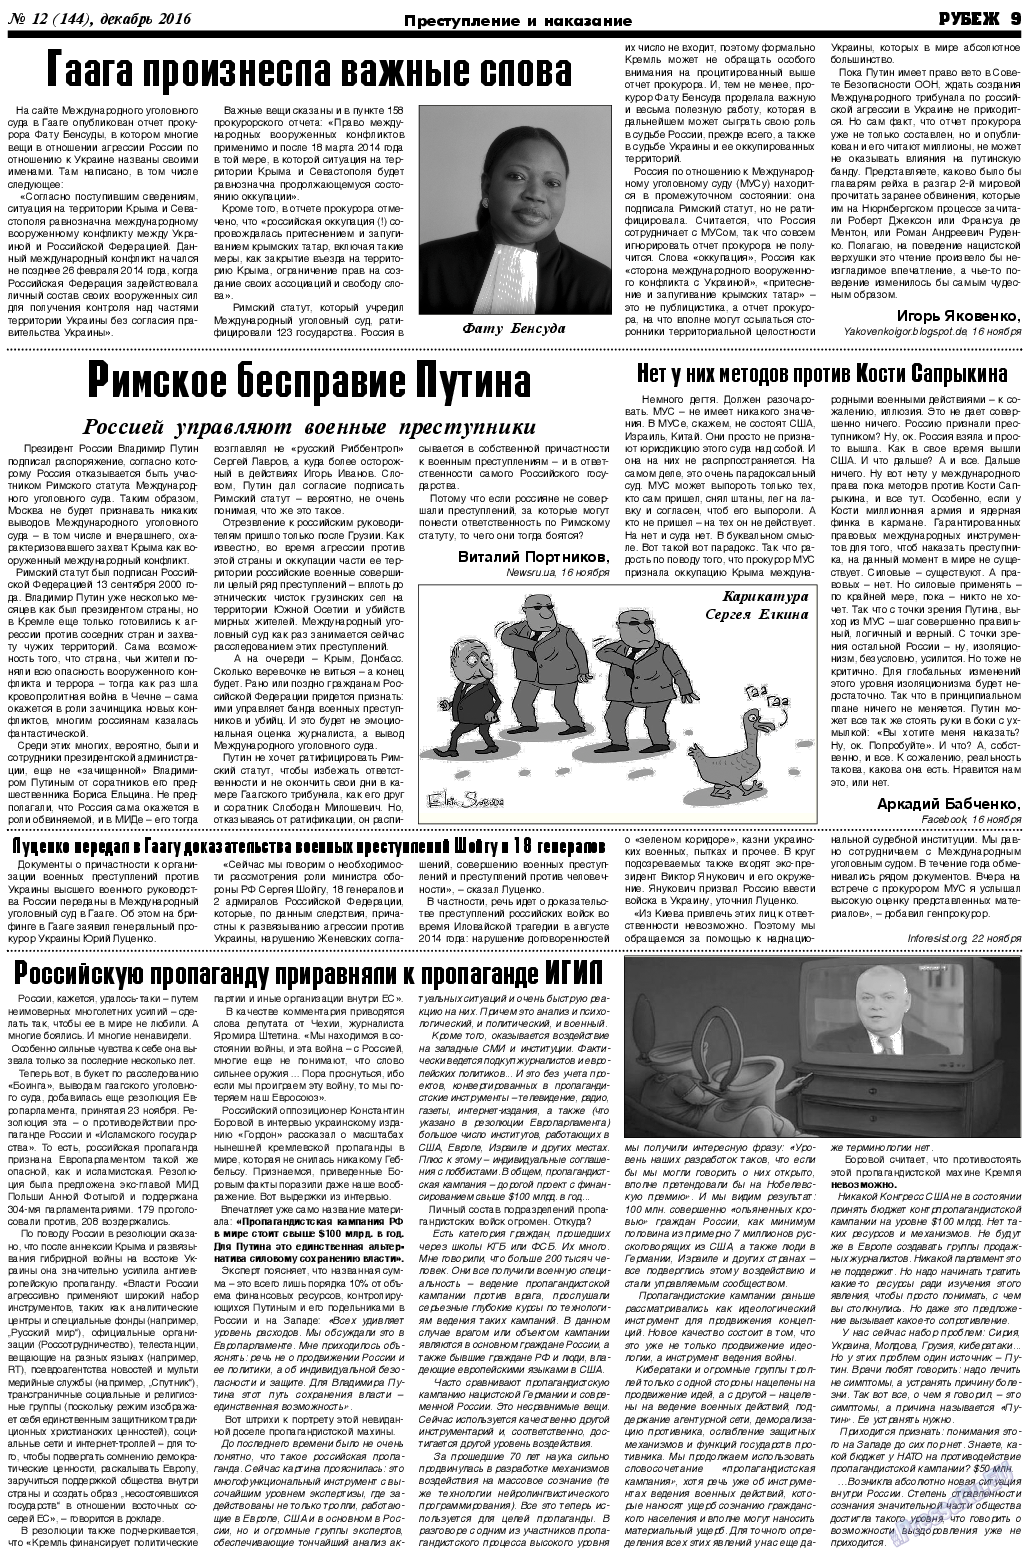 Рубеж, газета. 2016 №12 стр.9